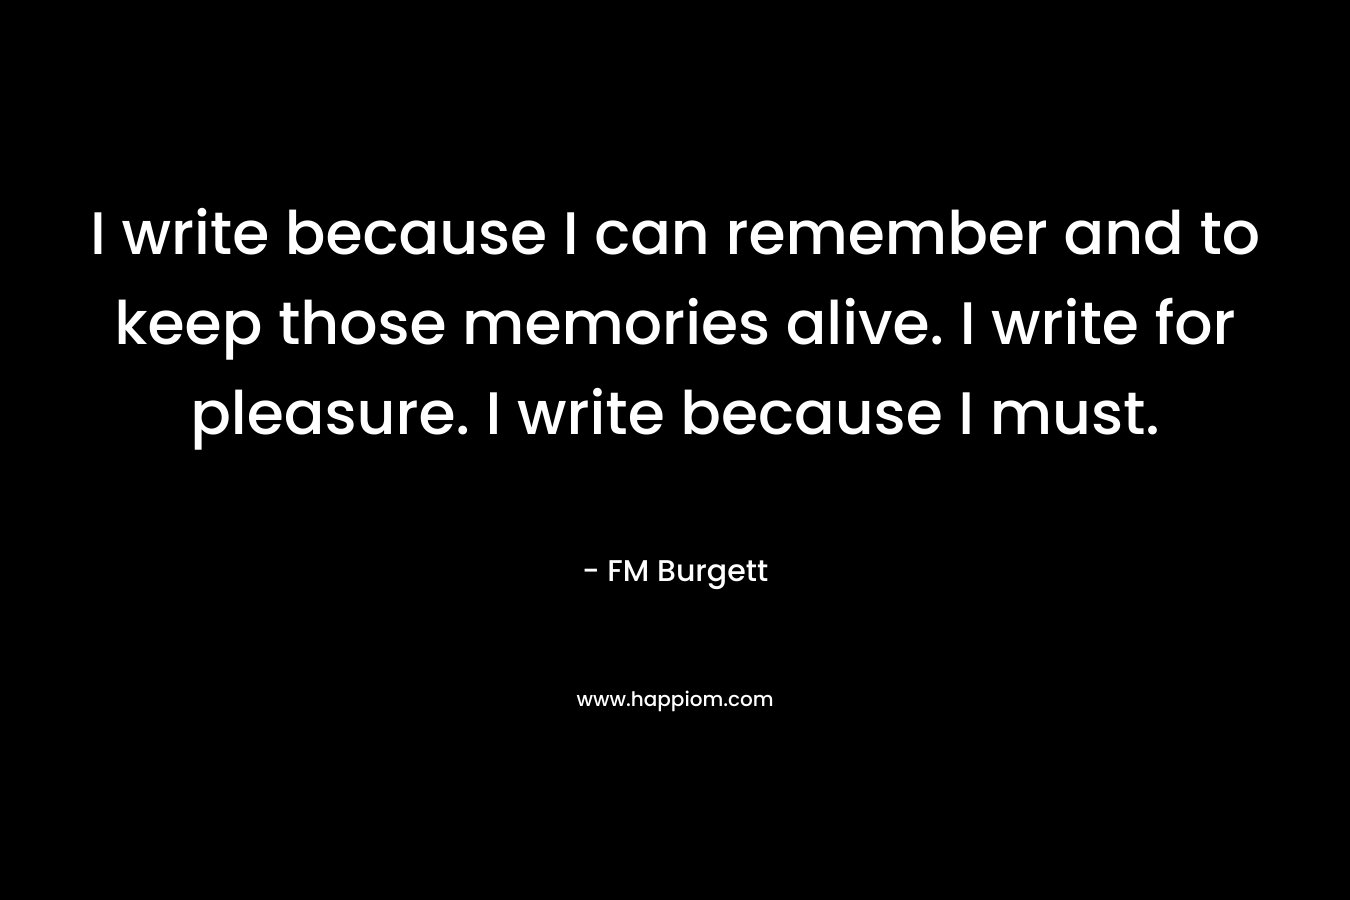 I write because I can remember and to keep those memories alive. I write for pleasure. I write because I must.